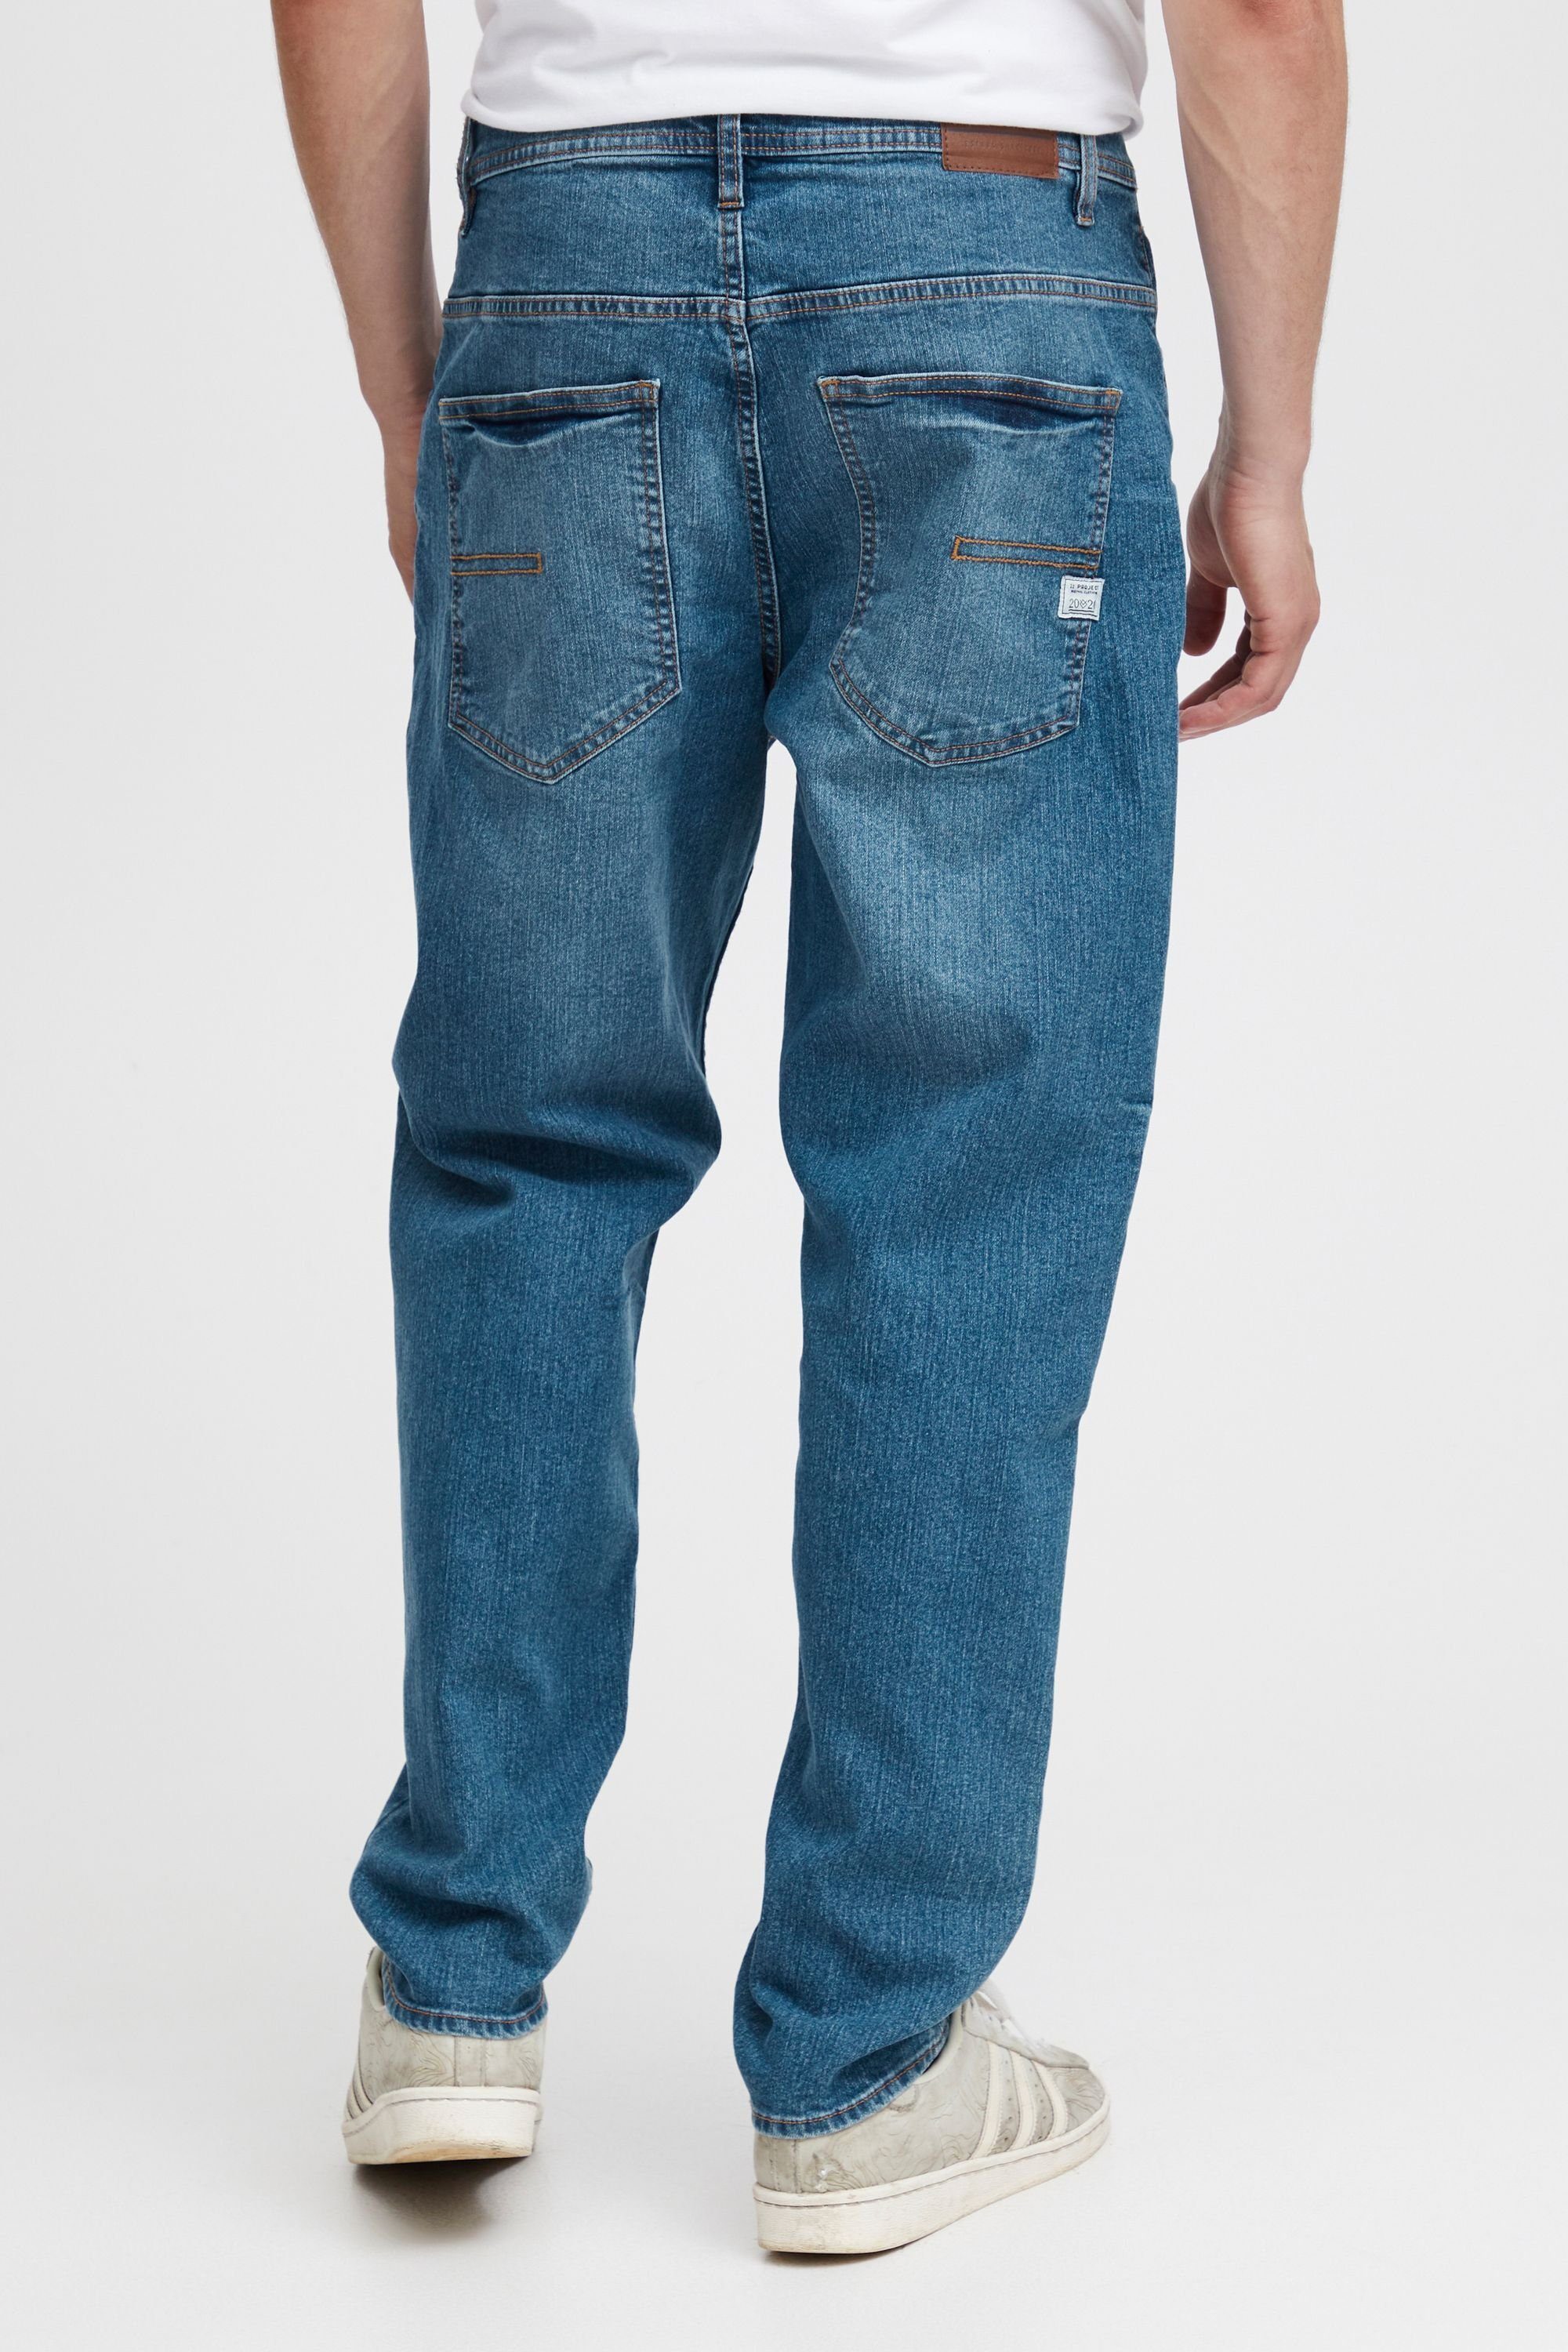 Project middle Project 5-Pocket-Jeans Denim 11 11 blue PRMads